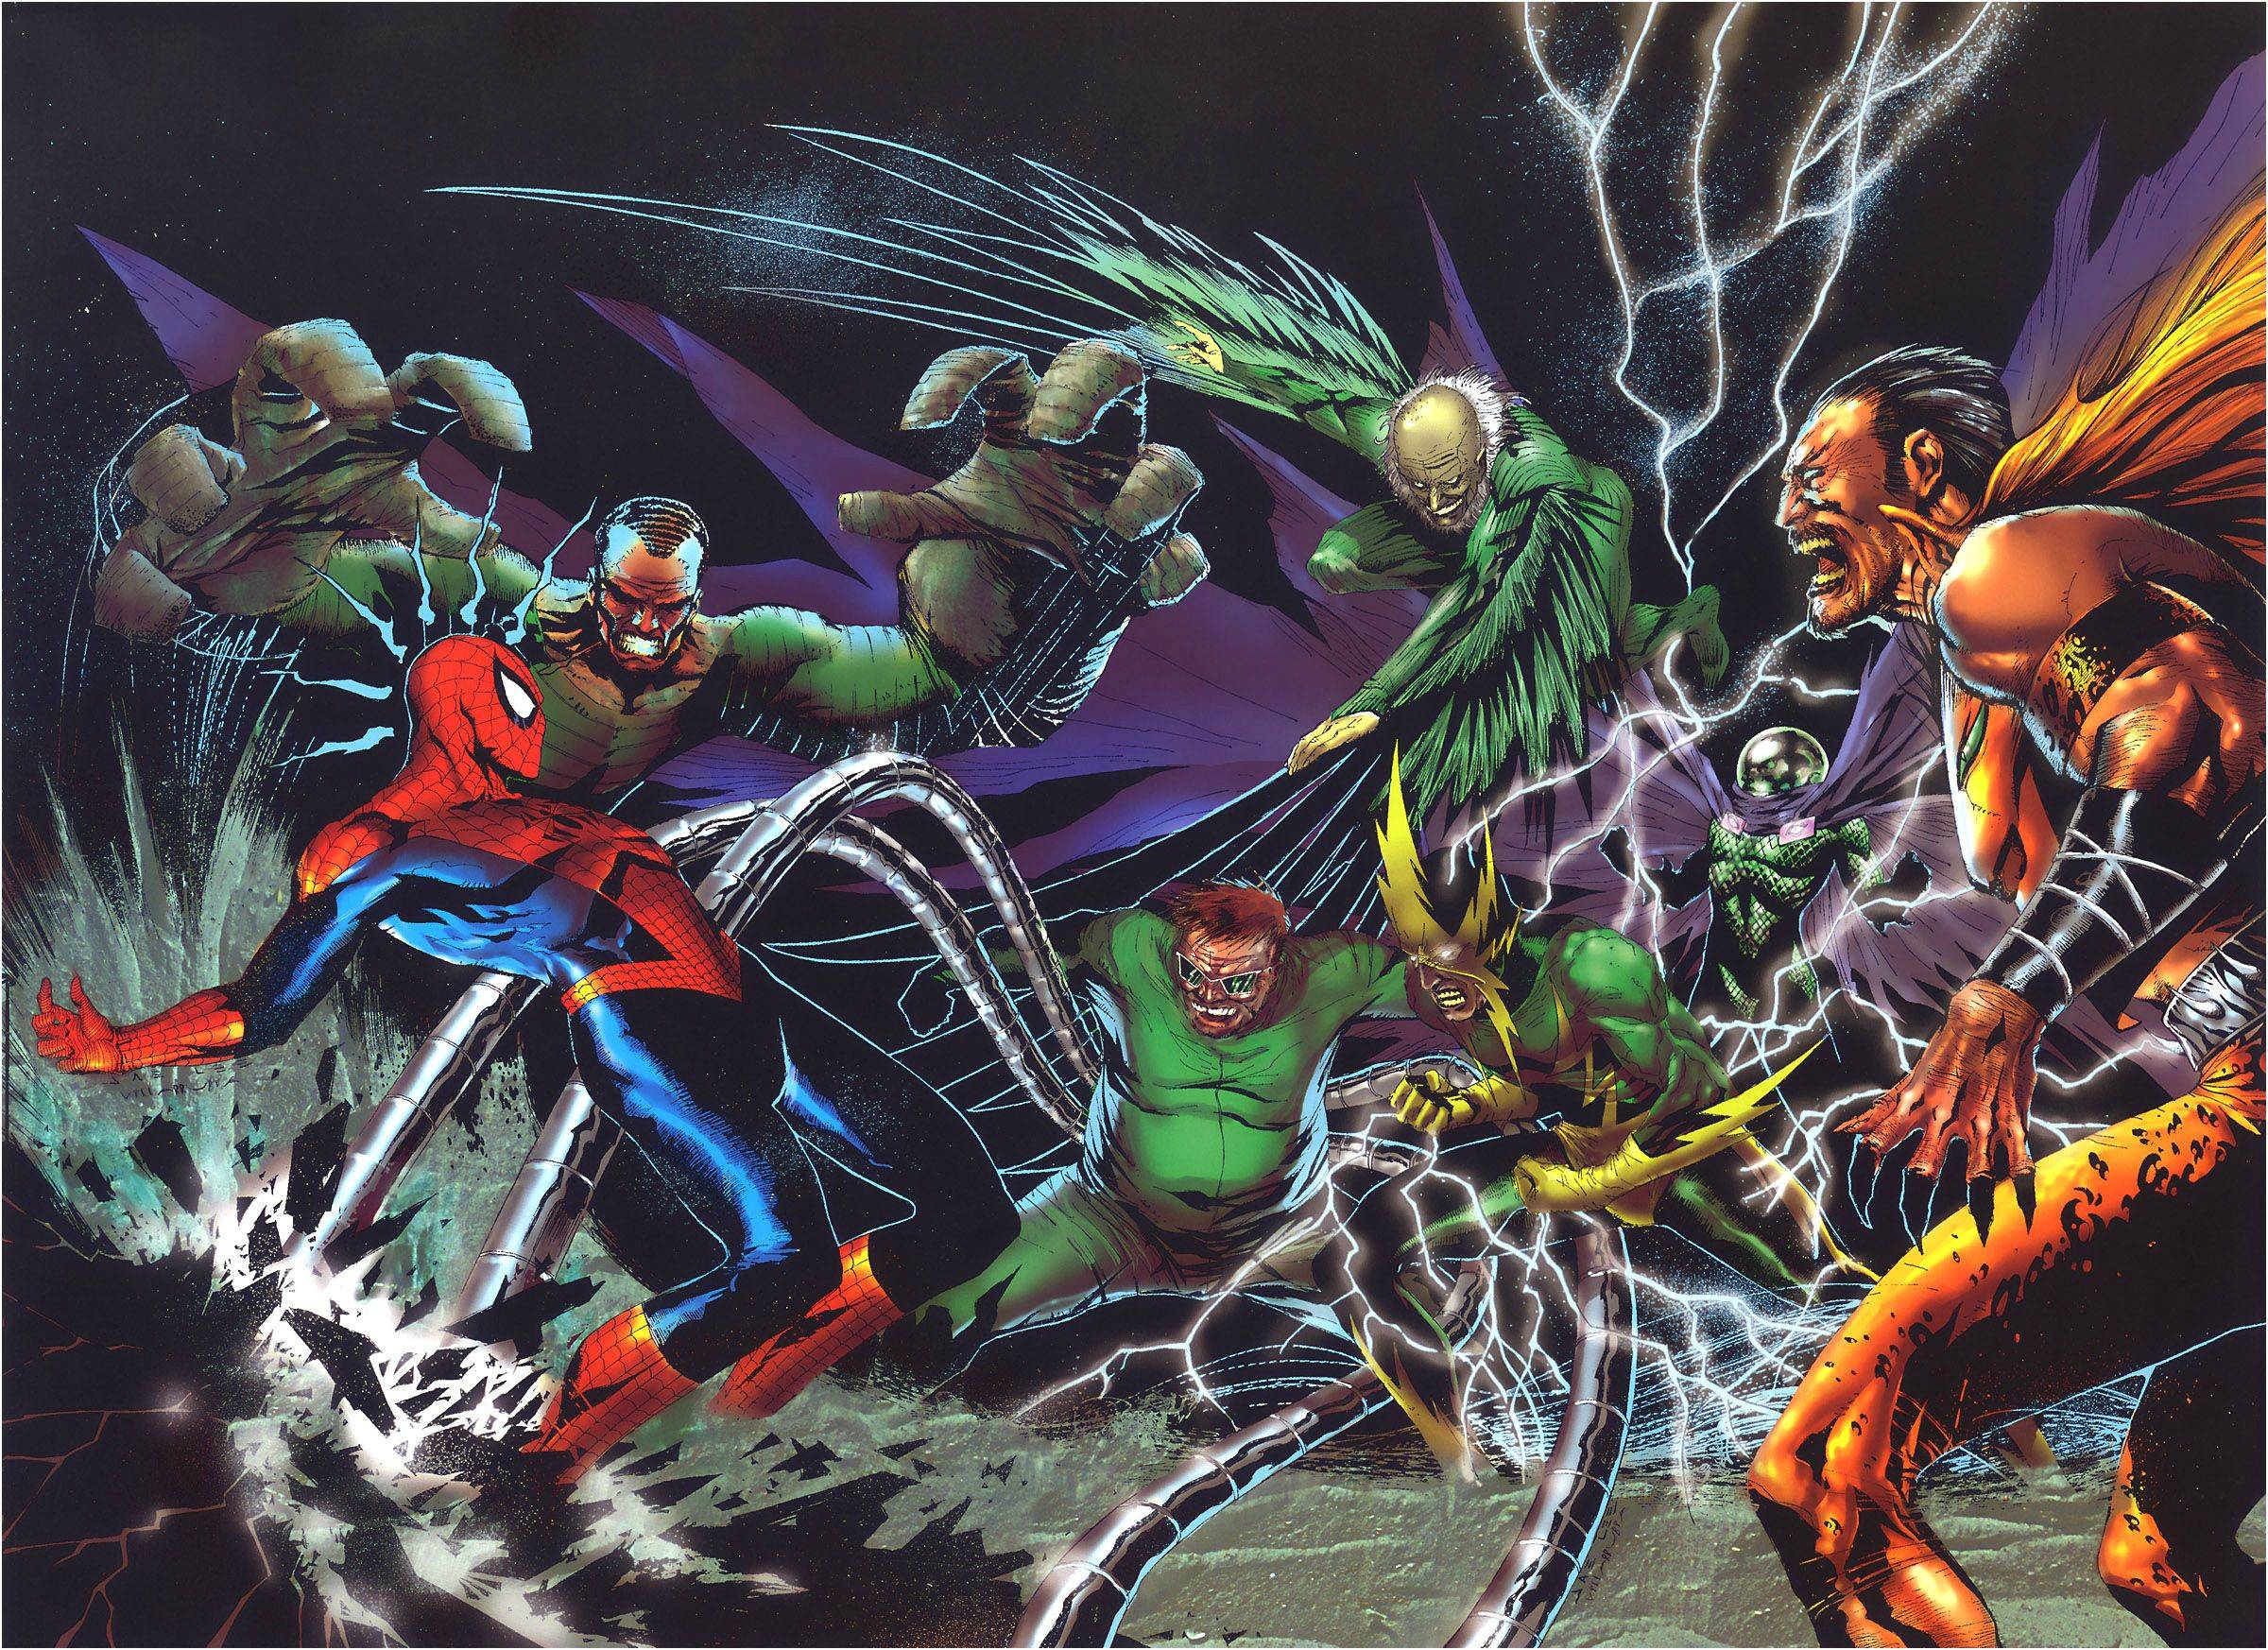 Comics Sinister Six HD Wallpaper | Background Image